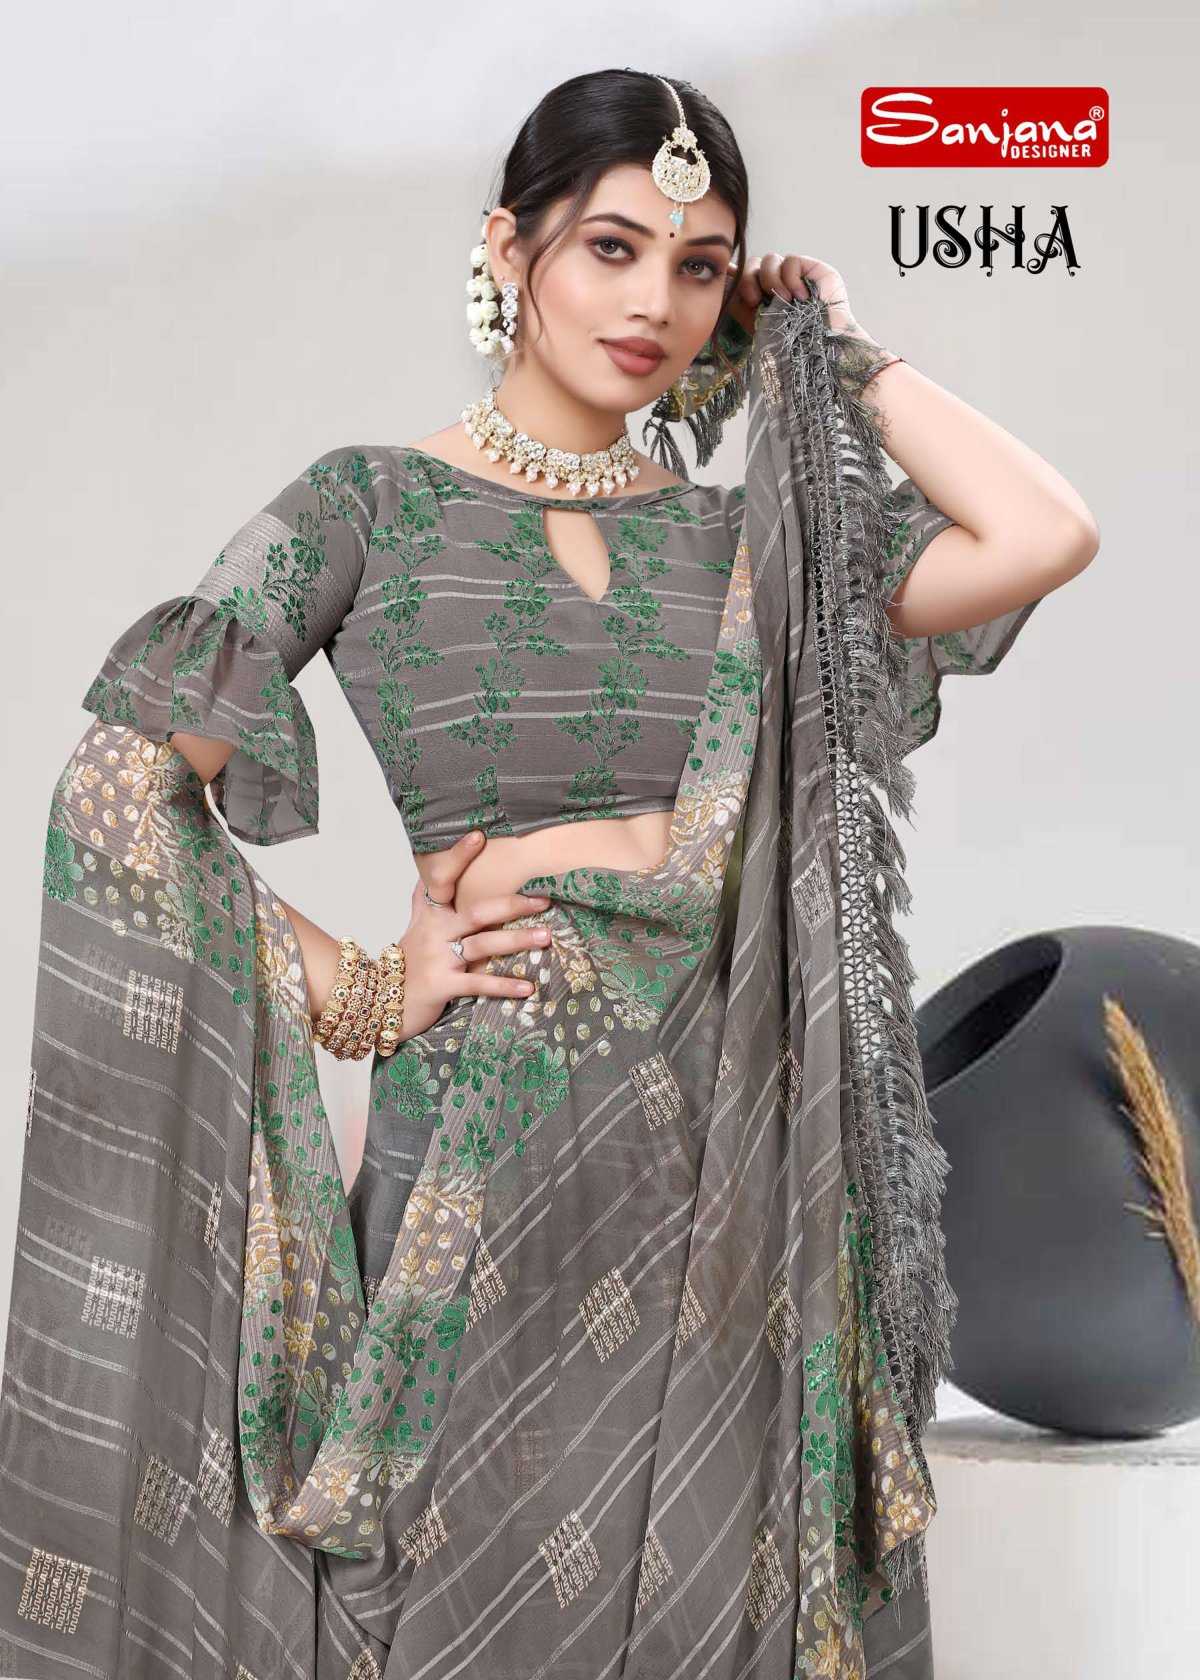 sanjana designer usha fancy casual weightless saree collection